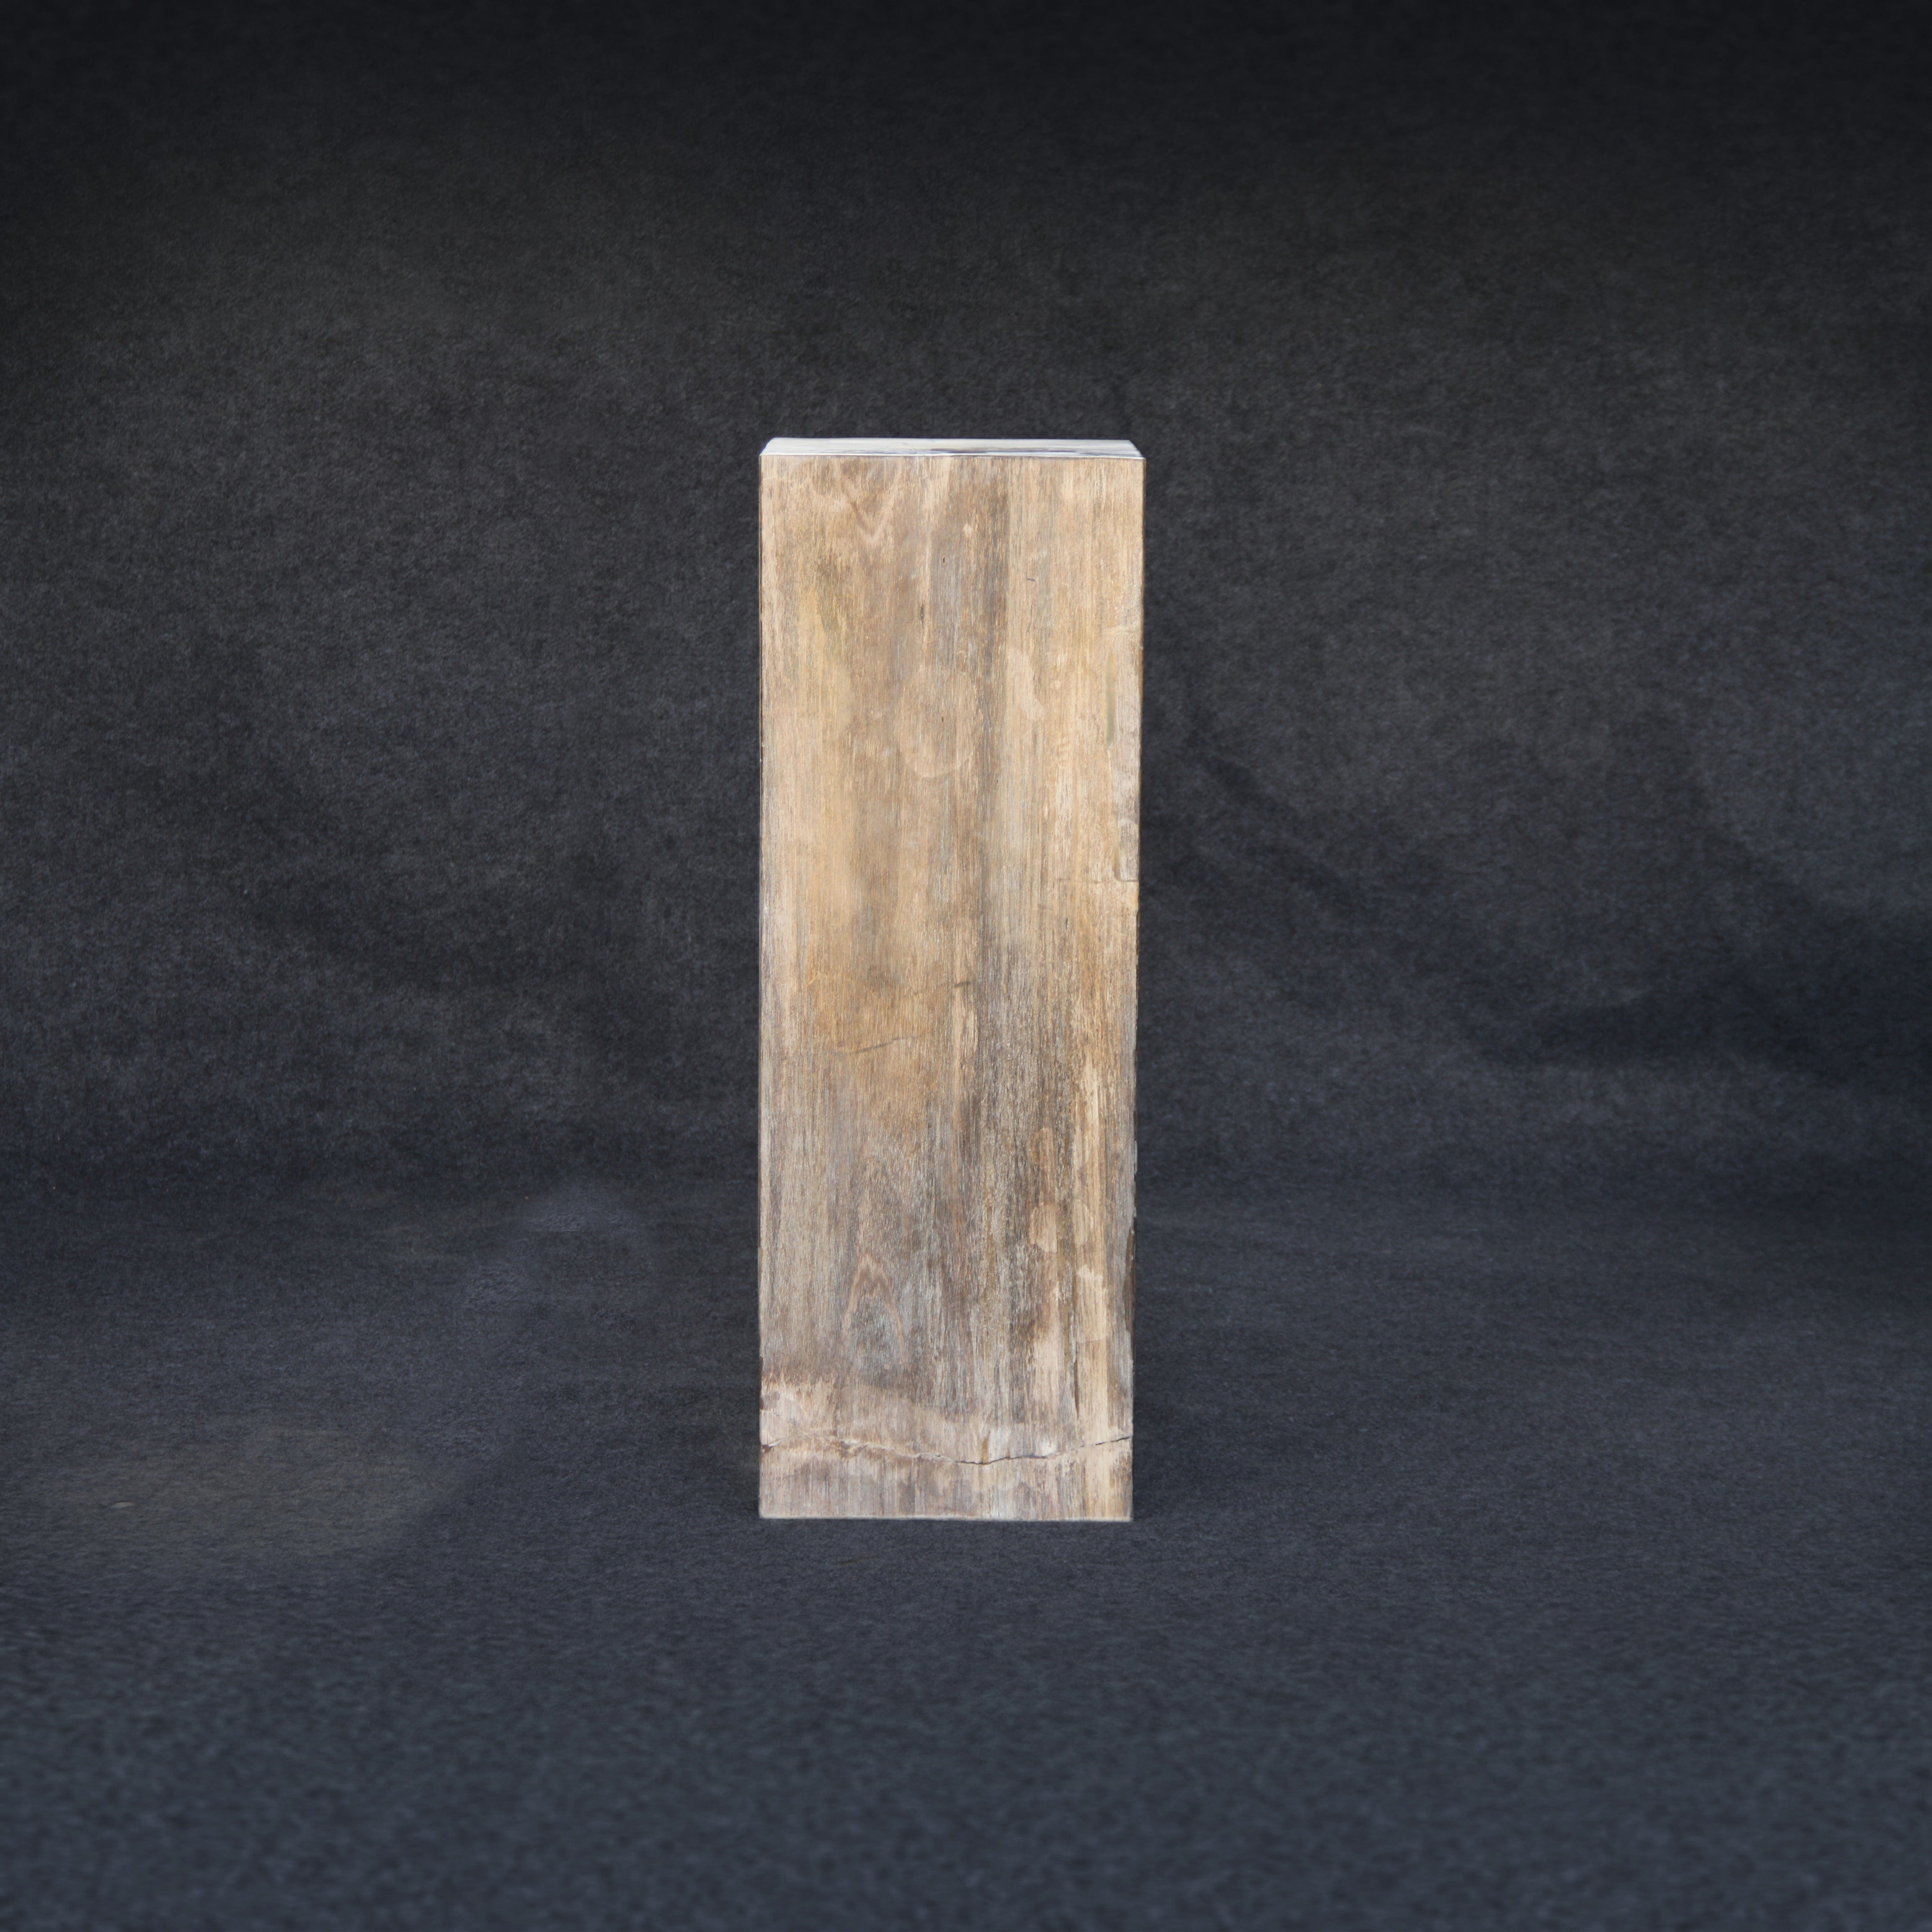 Kalifano Petrified Wood Brown Petrified Wood Hollow Square Pedestal 39" / 174 lbs PWP8000.023